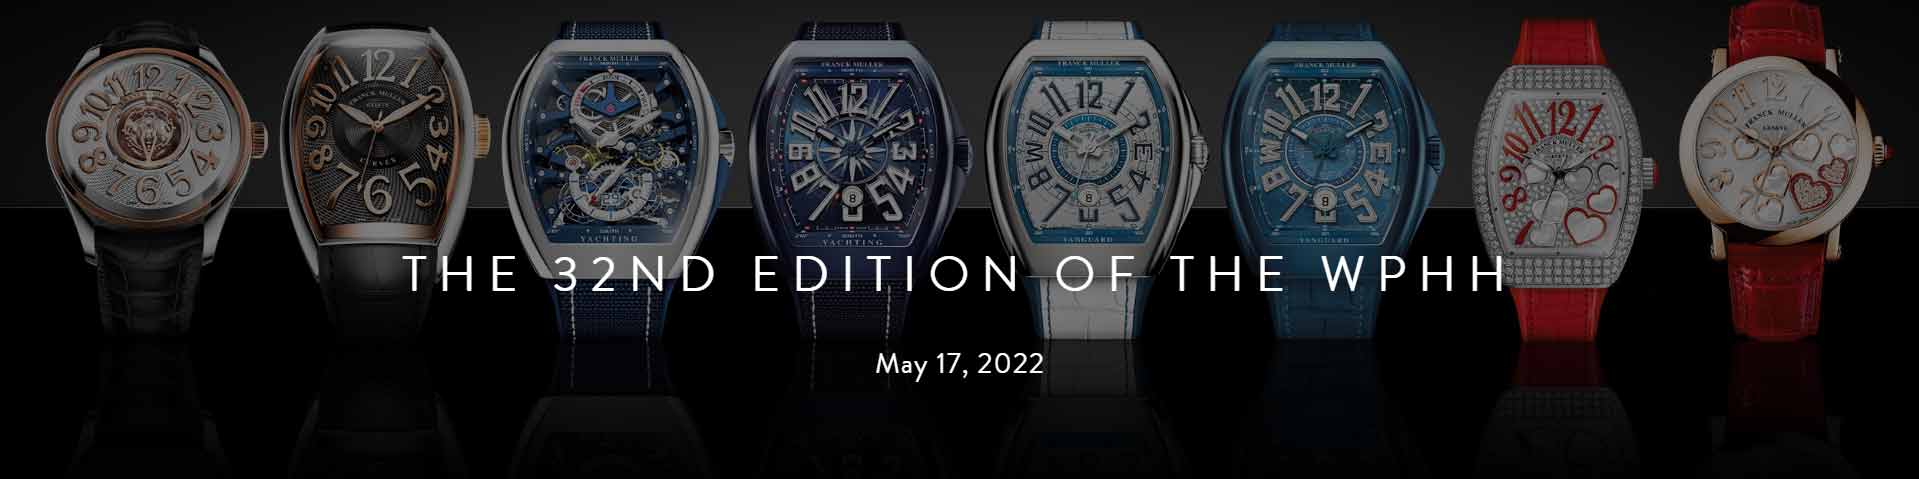 Các mẫu đồng hồ Franck Muller